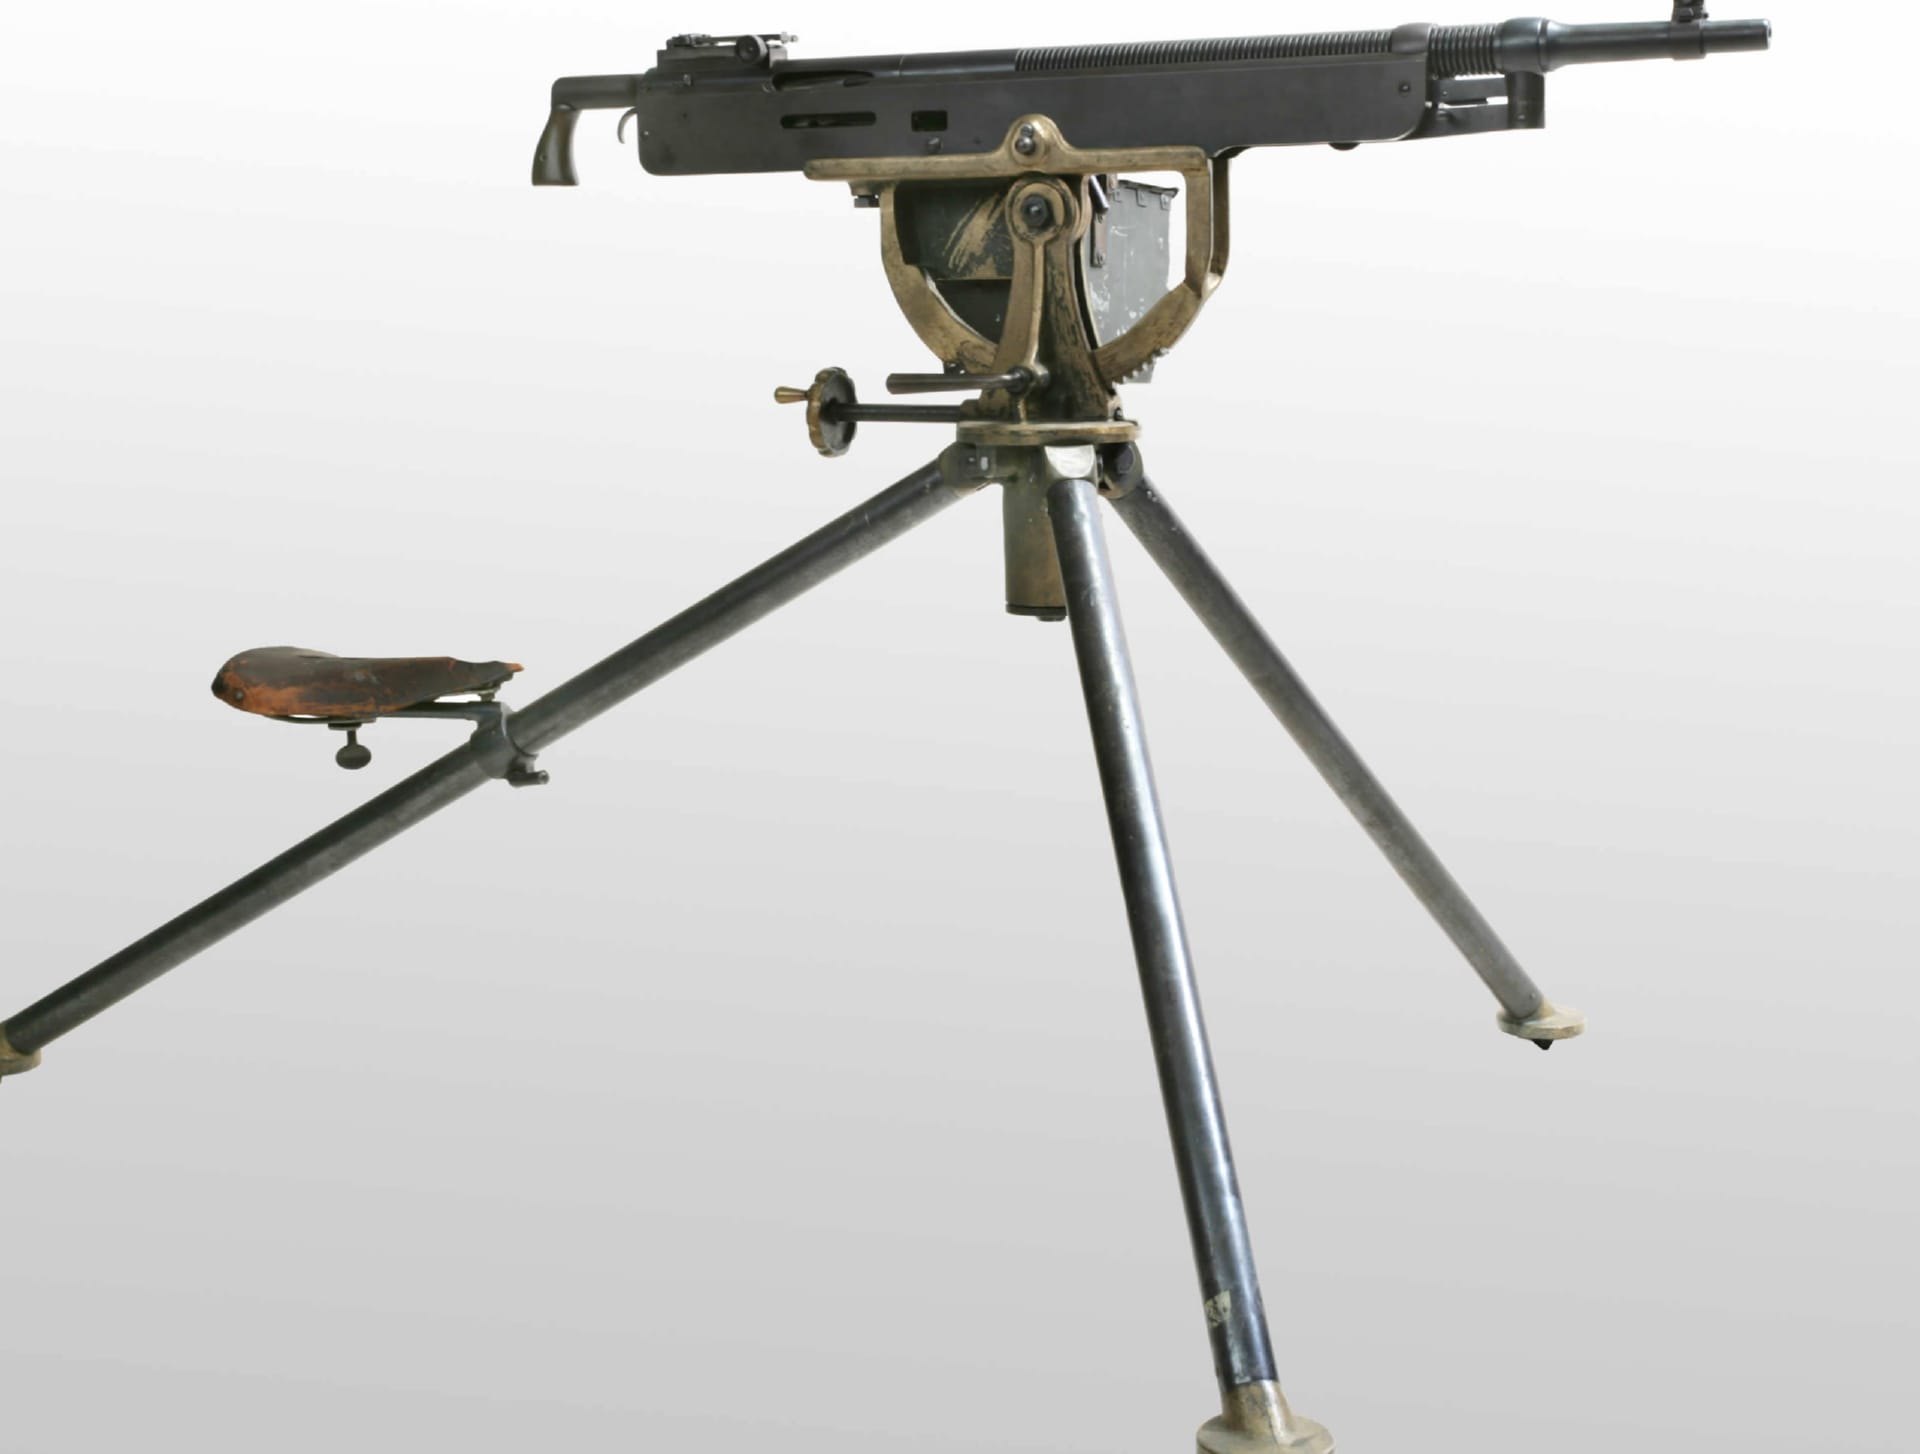 M1895 Colt-Browning Machine Gun at 1024 x 1024 iPad size wallpapers HD quality